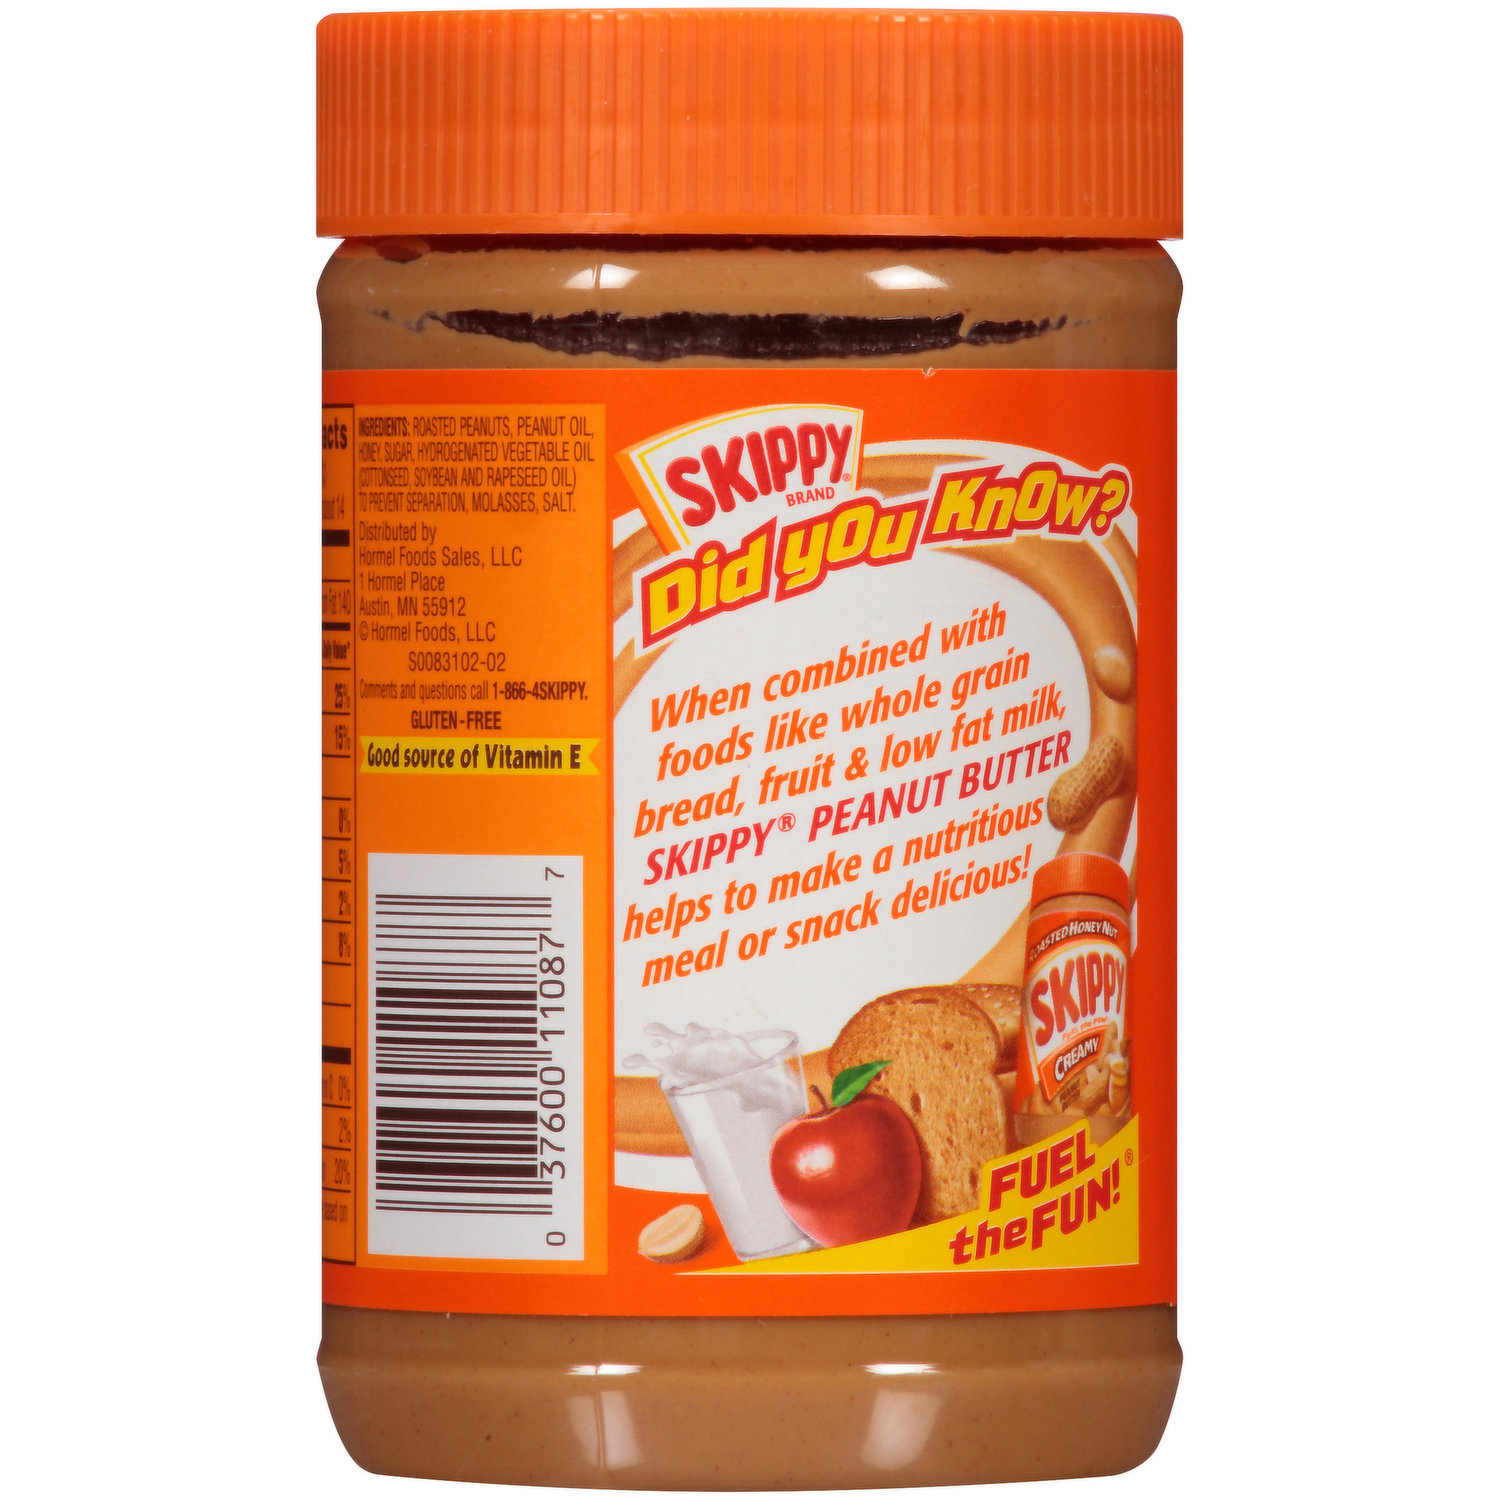 Creamy Peanut Butter - GOOD GOOD®